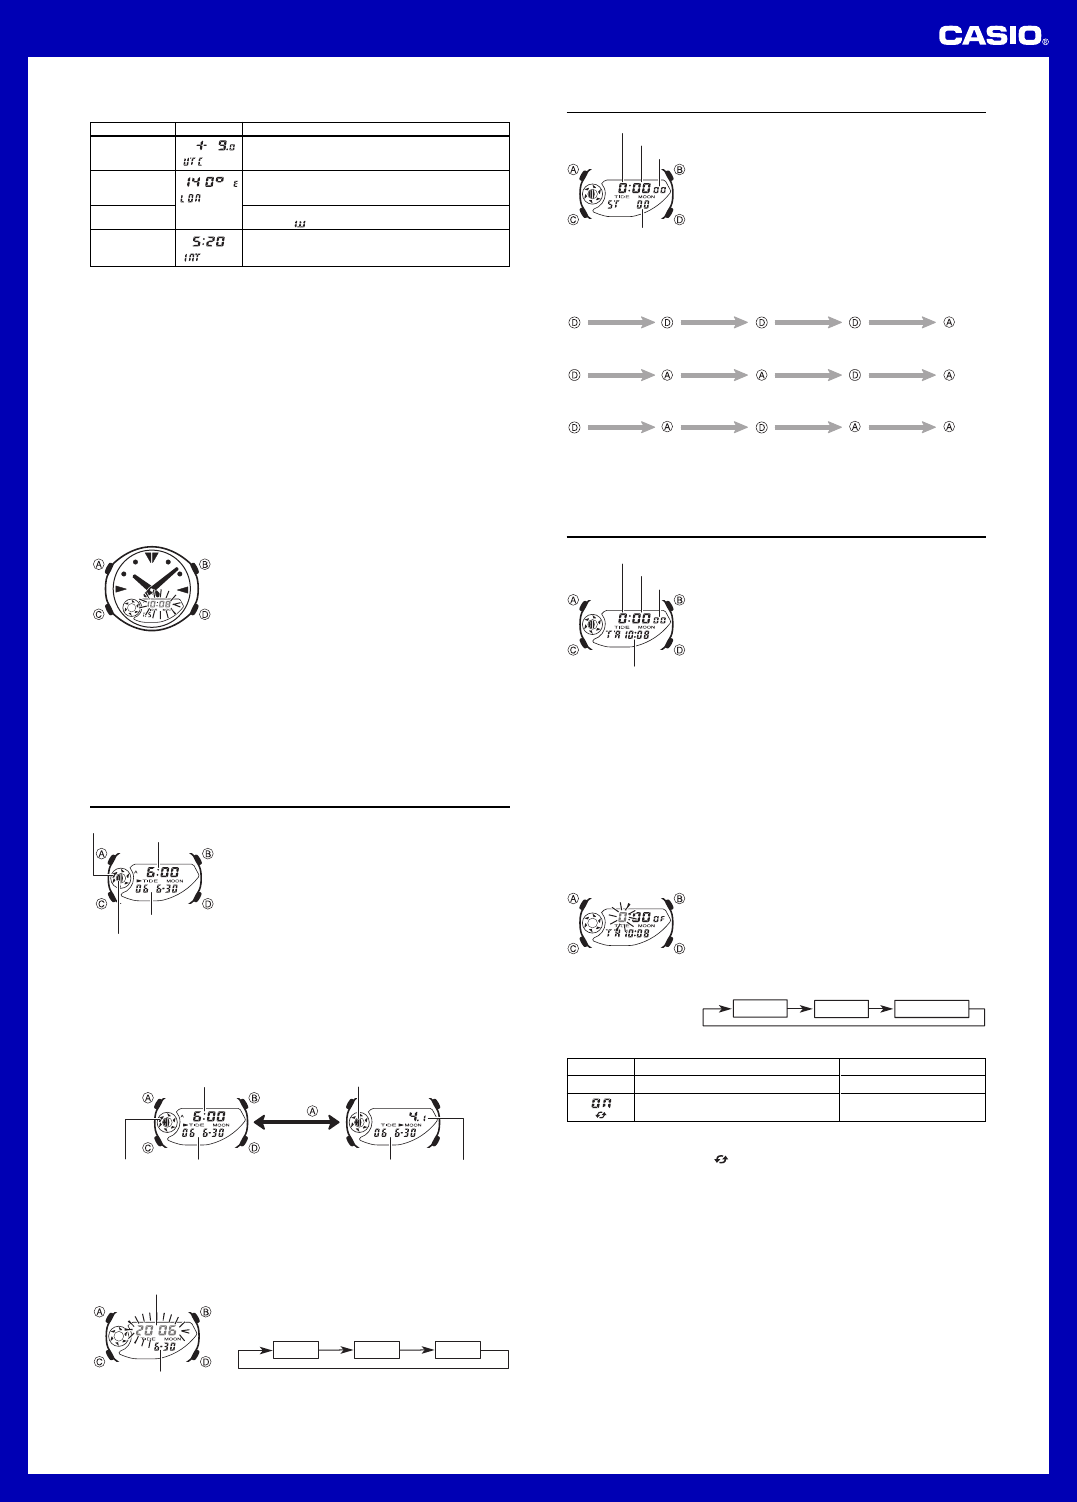 Manual Casio 3796 (page 2 of 4) (English)